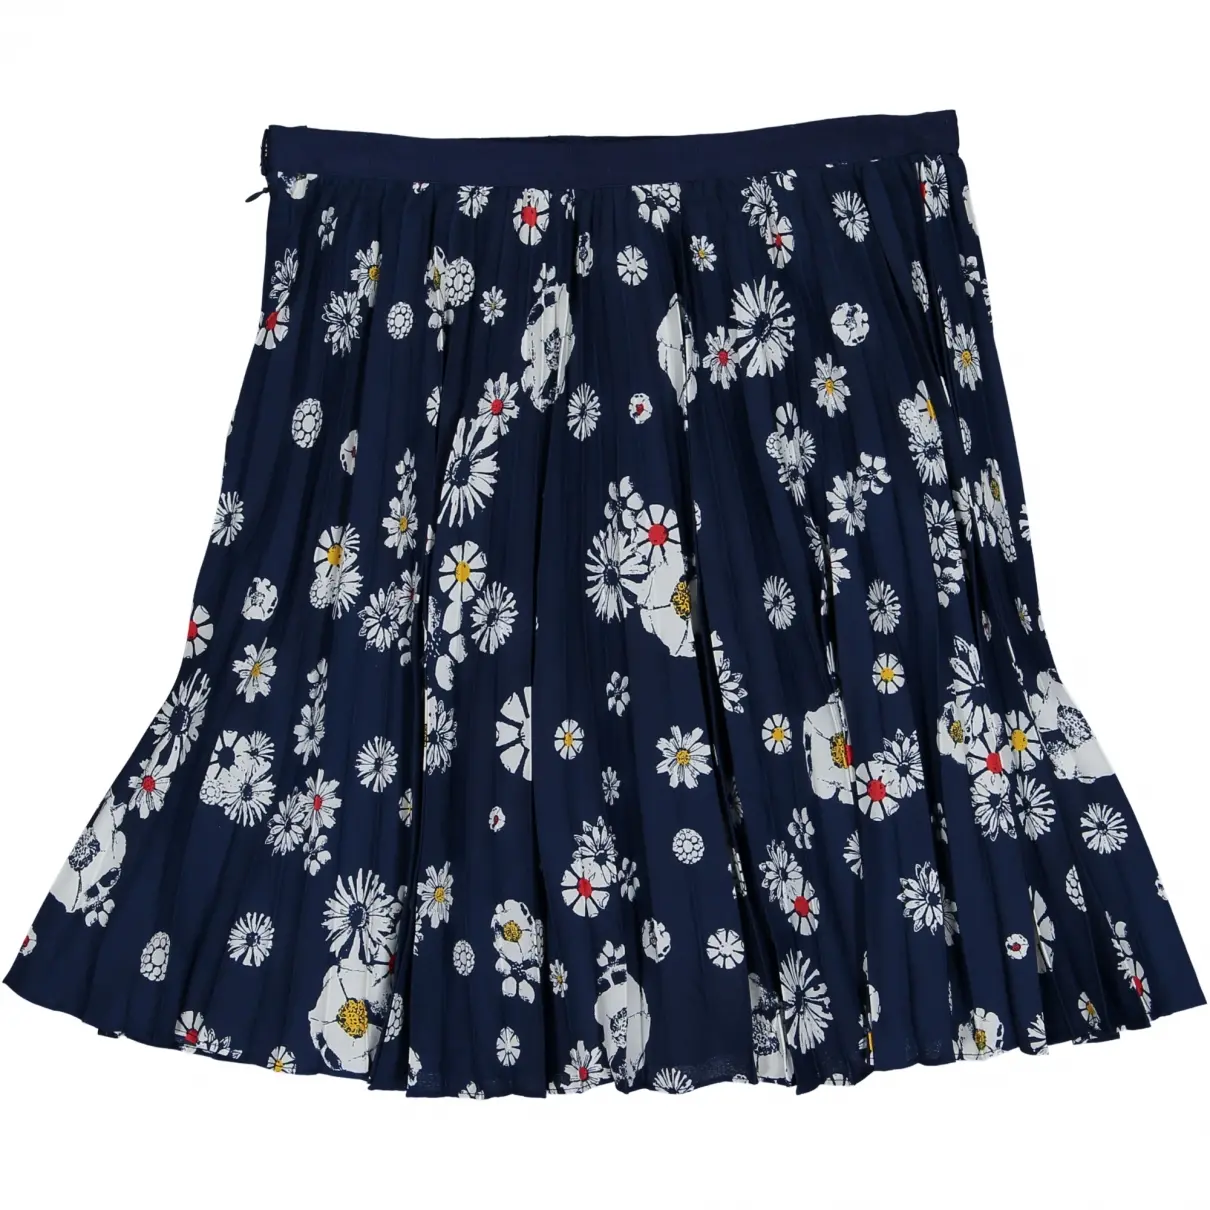 Jason Wu Mid-length skirt for sale